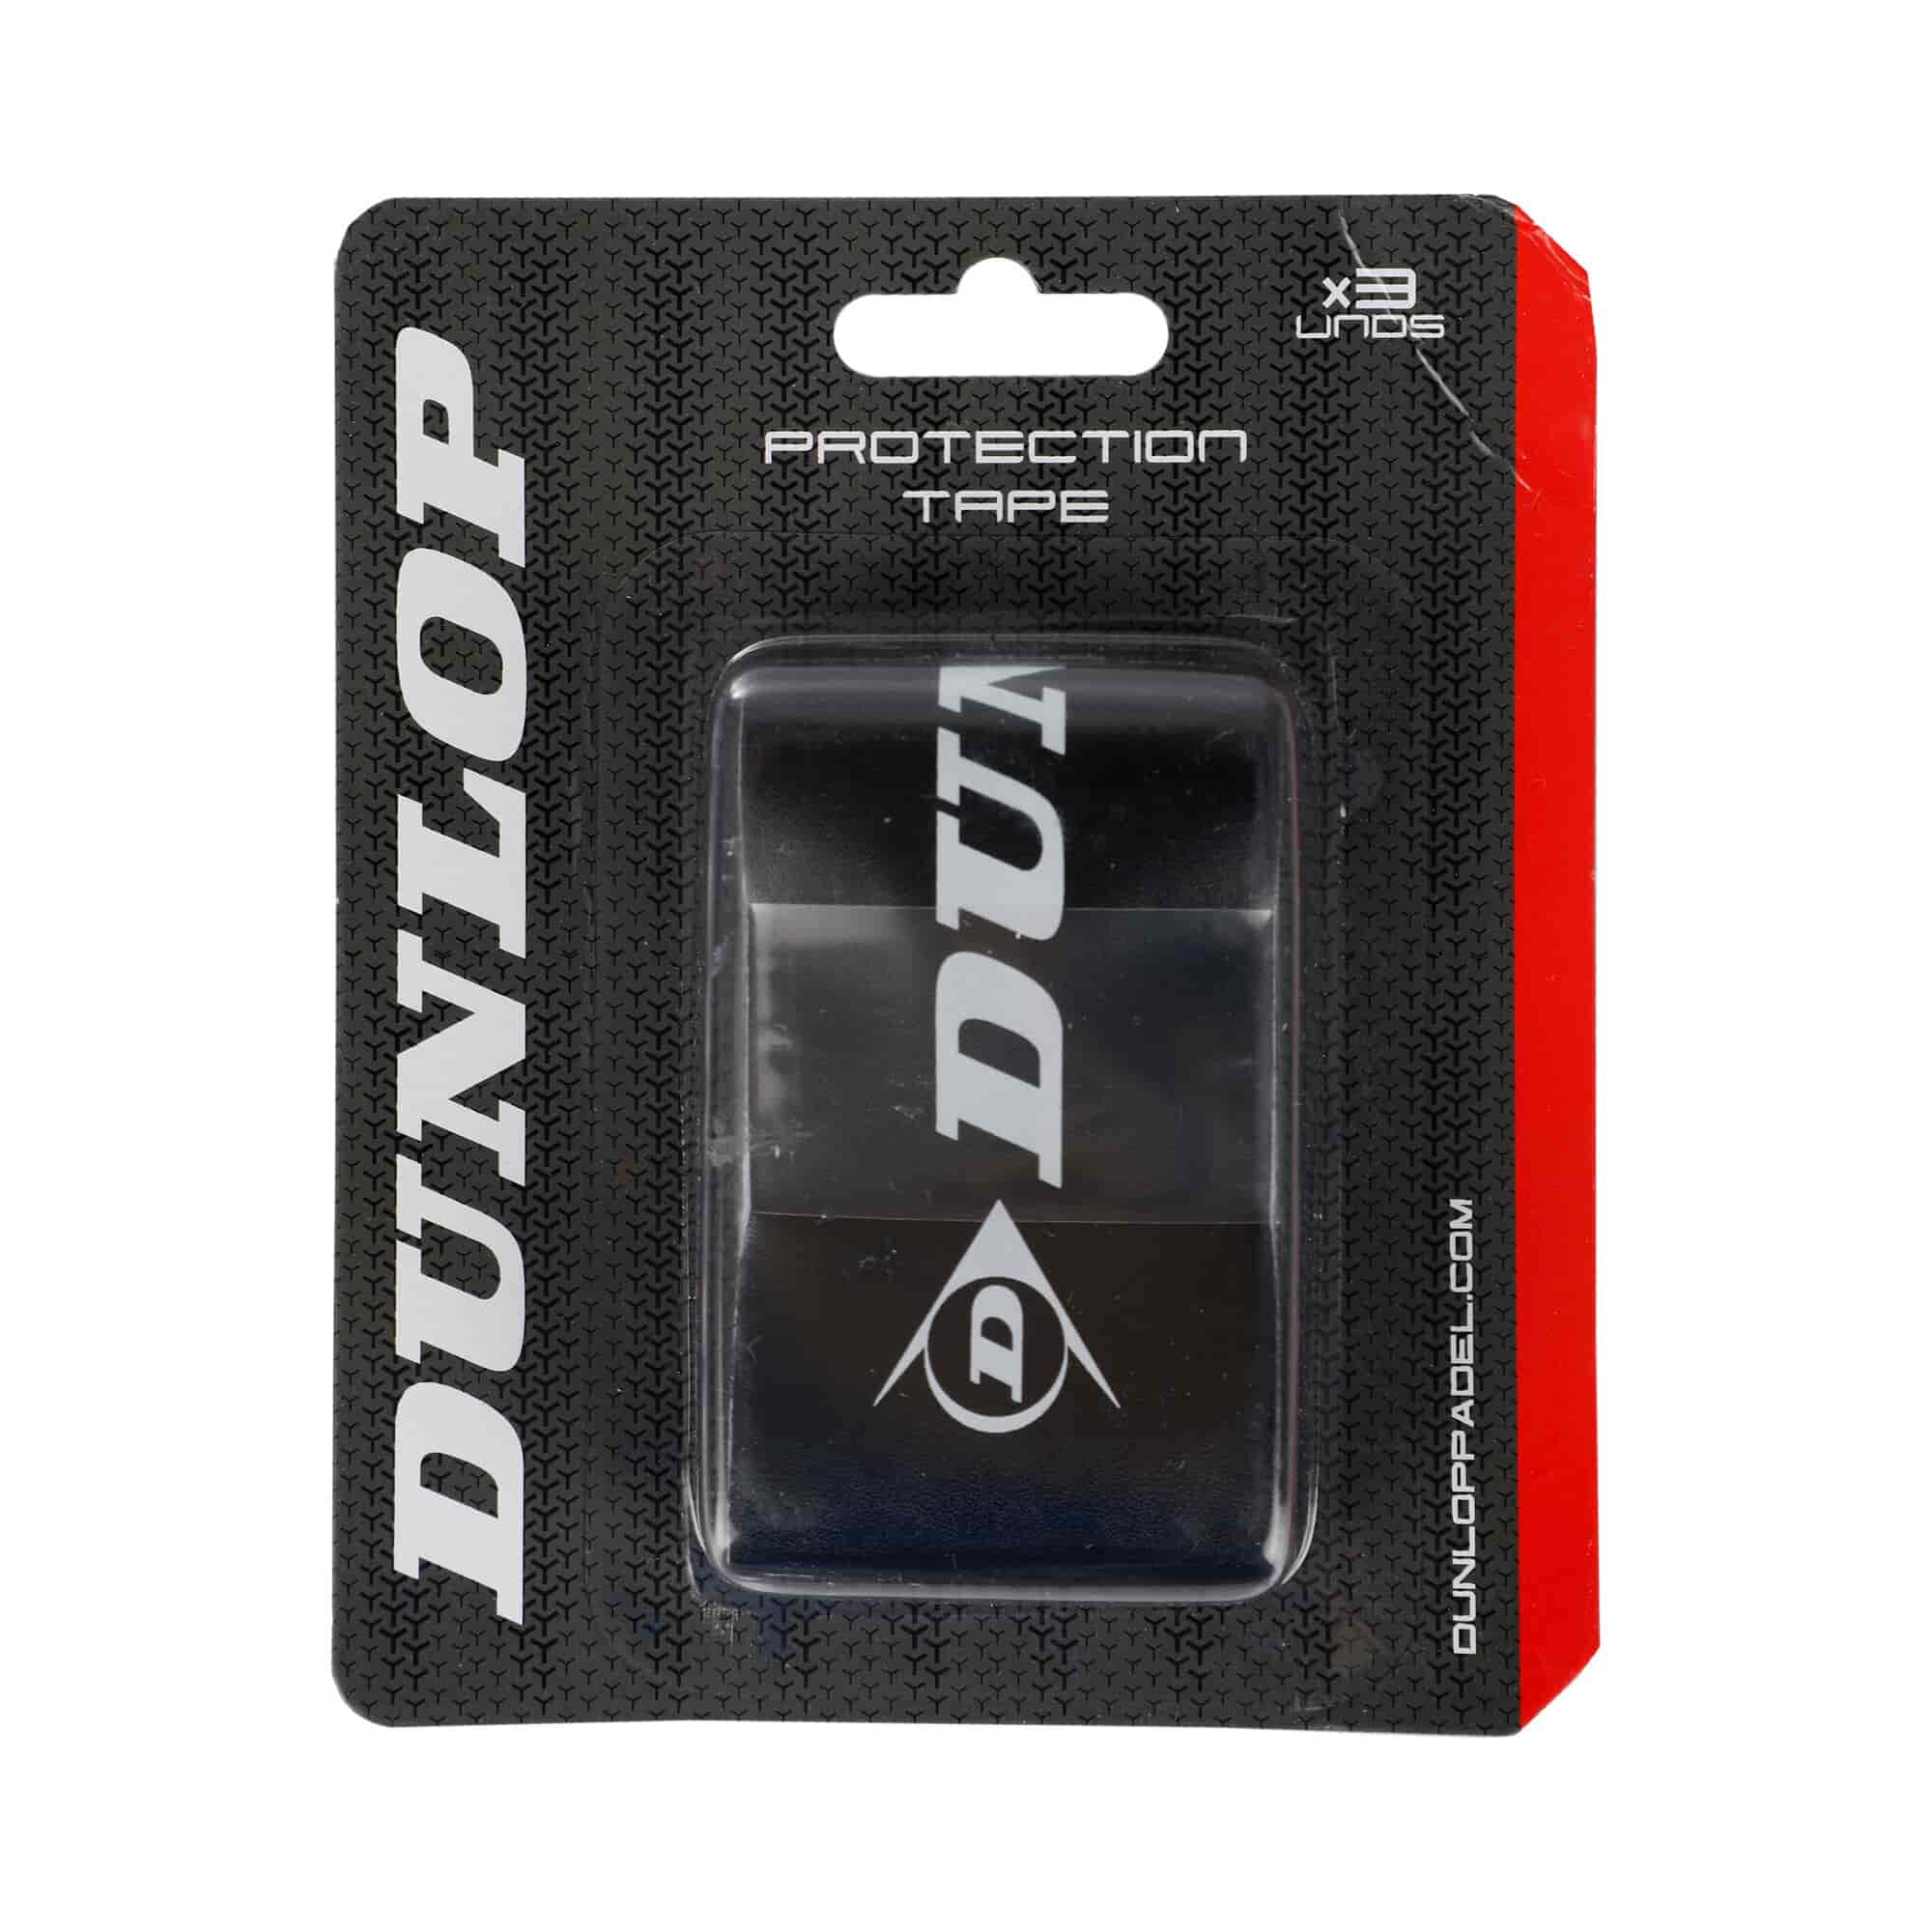 DUNLOP Protection Tape - Rahmenschutzband